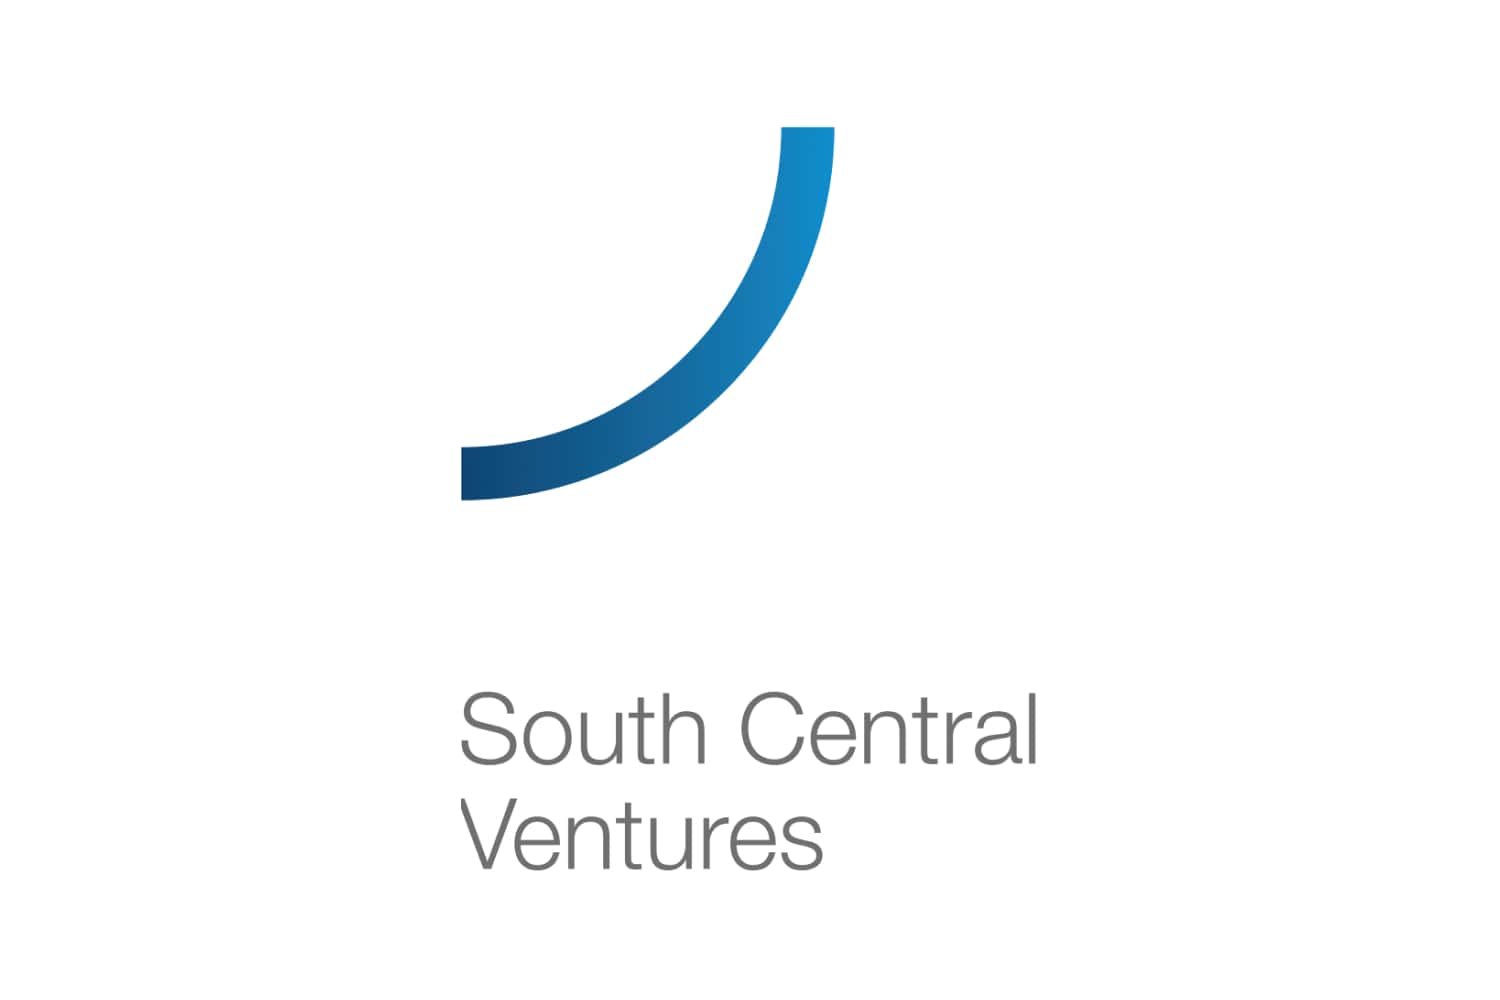 South Central Ventures logo